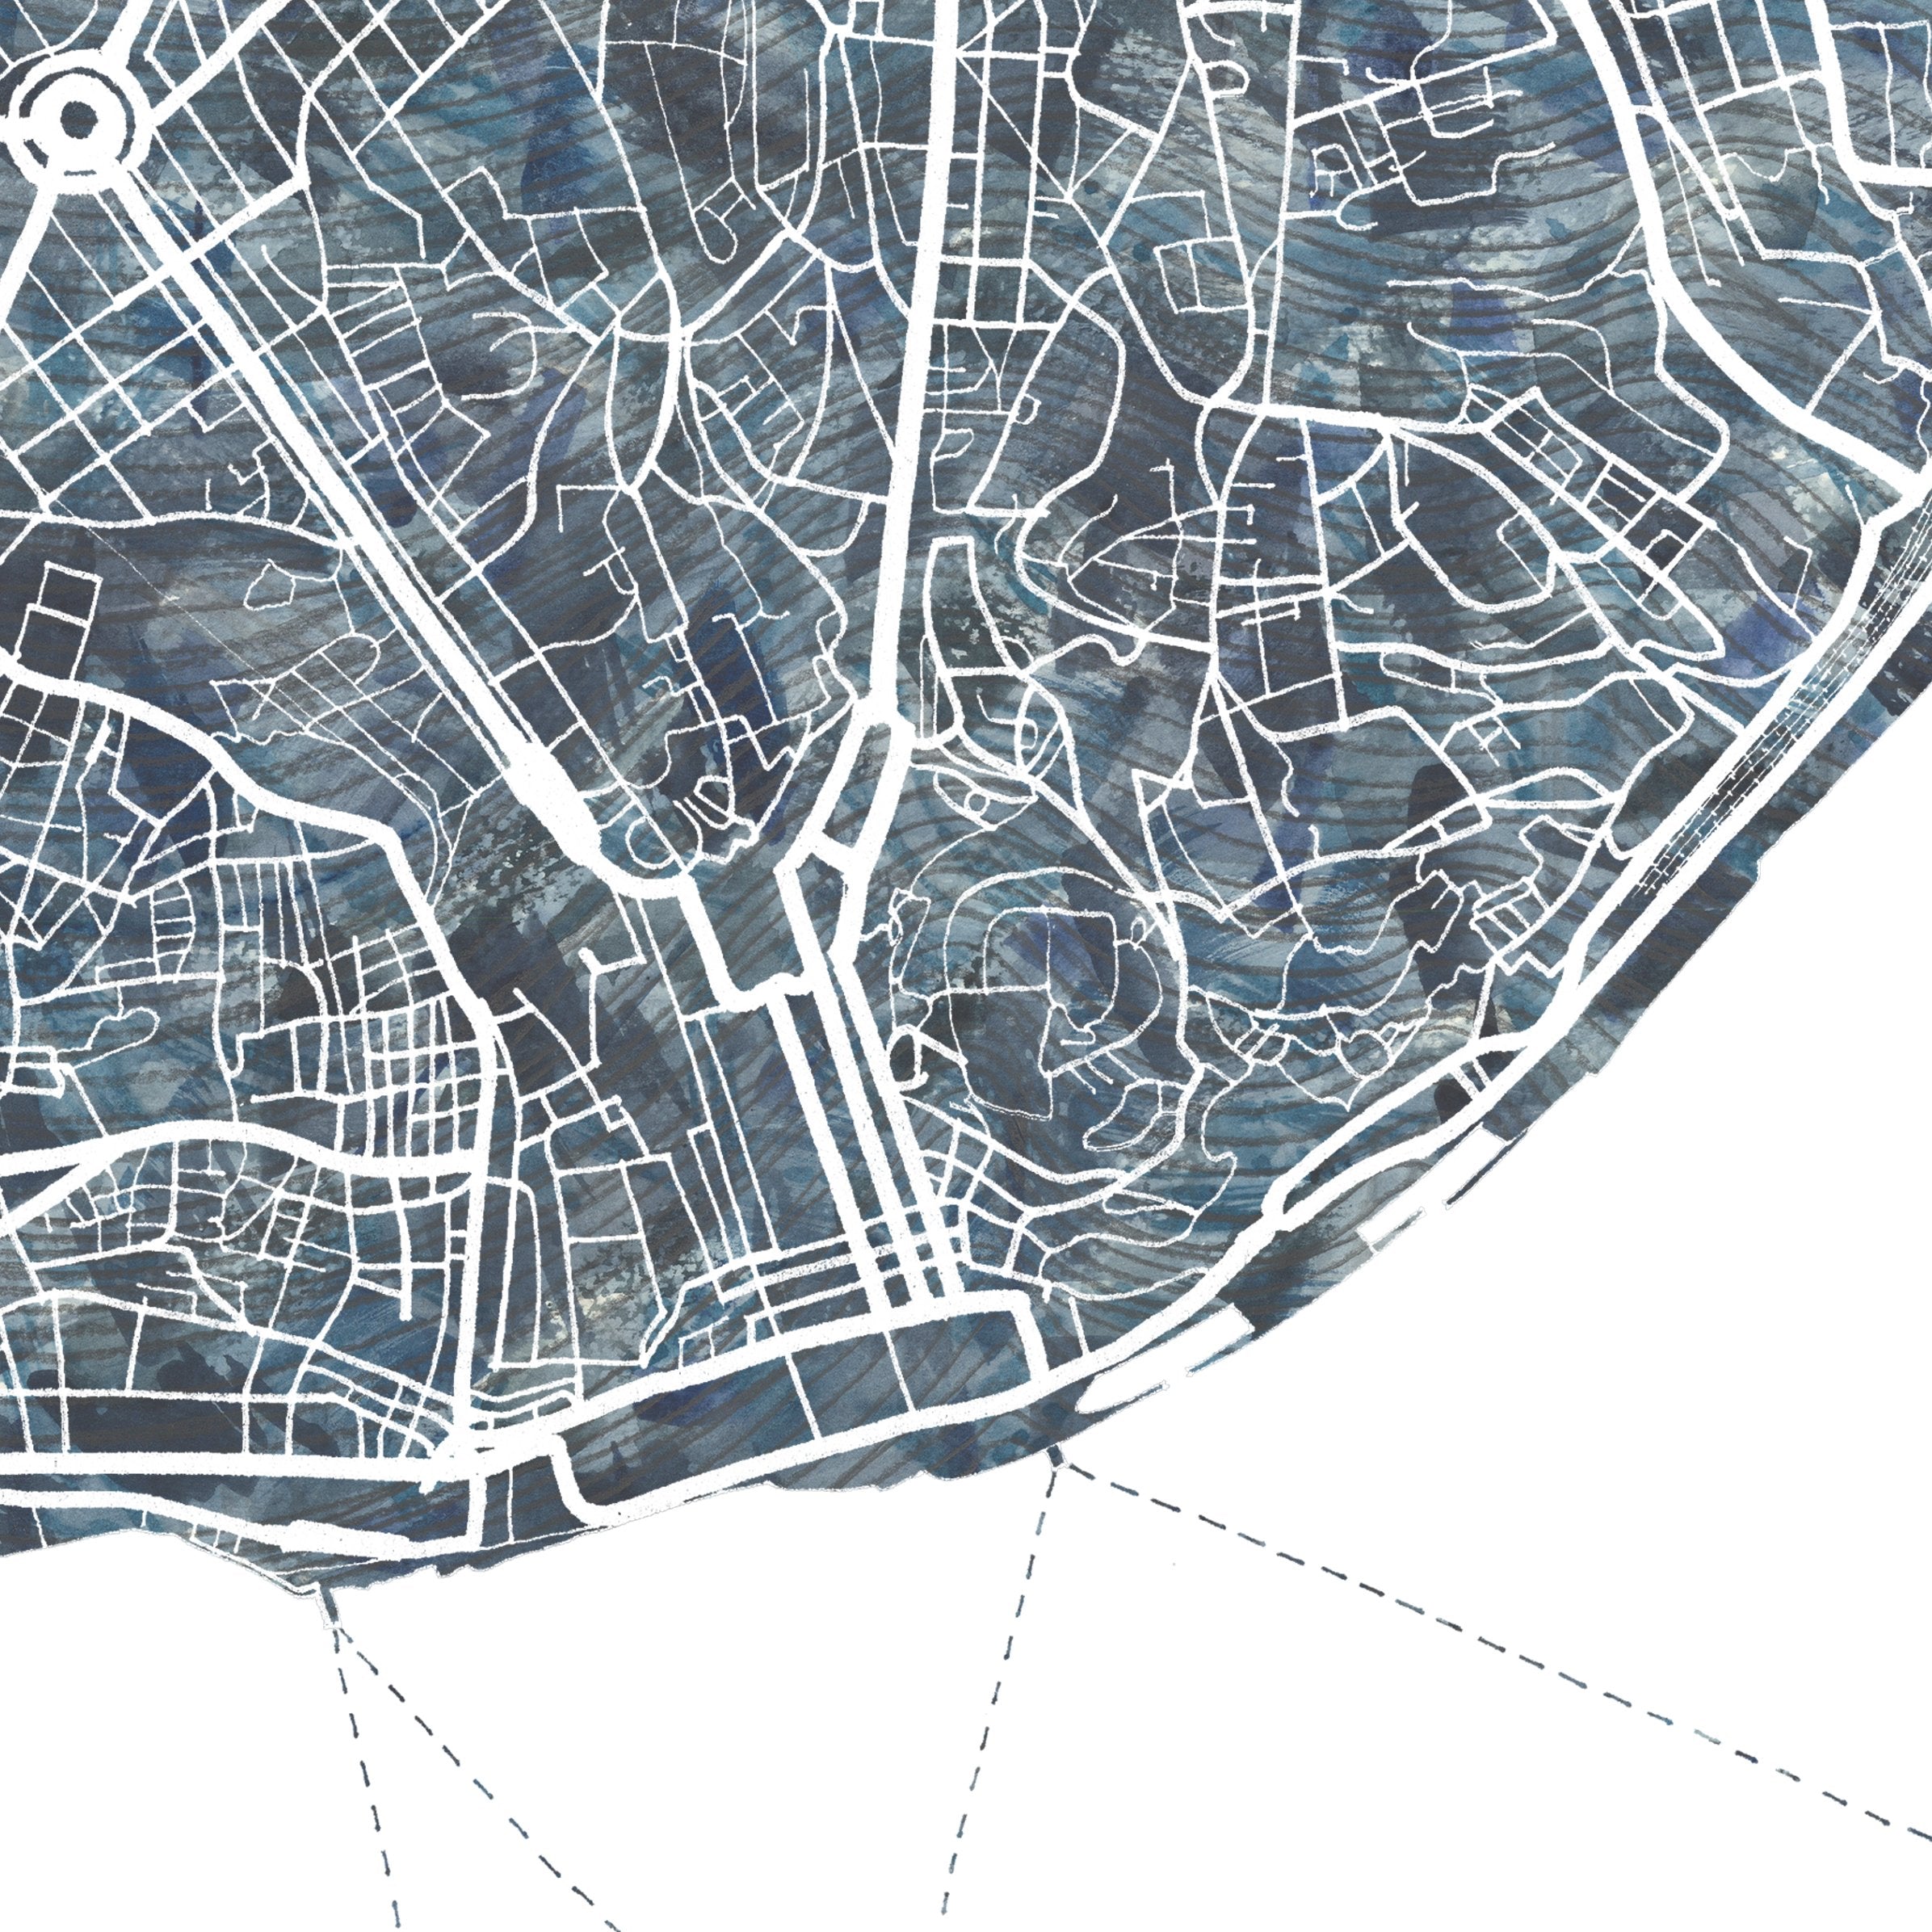 LISBON Urban Fabrics City Map: PRINT